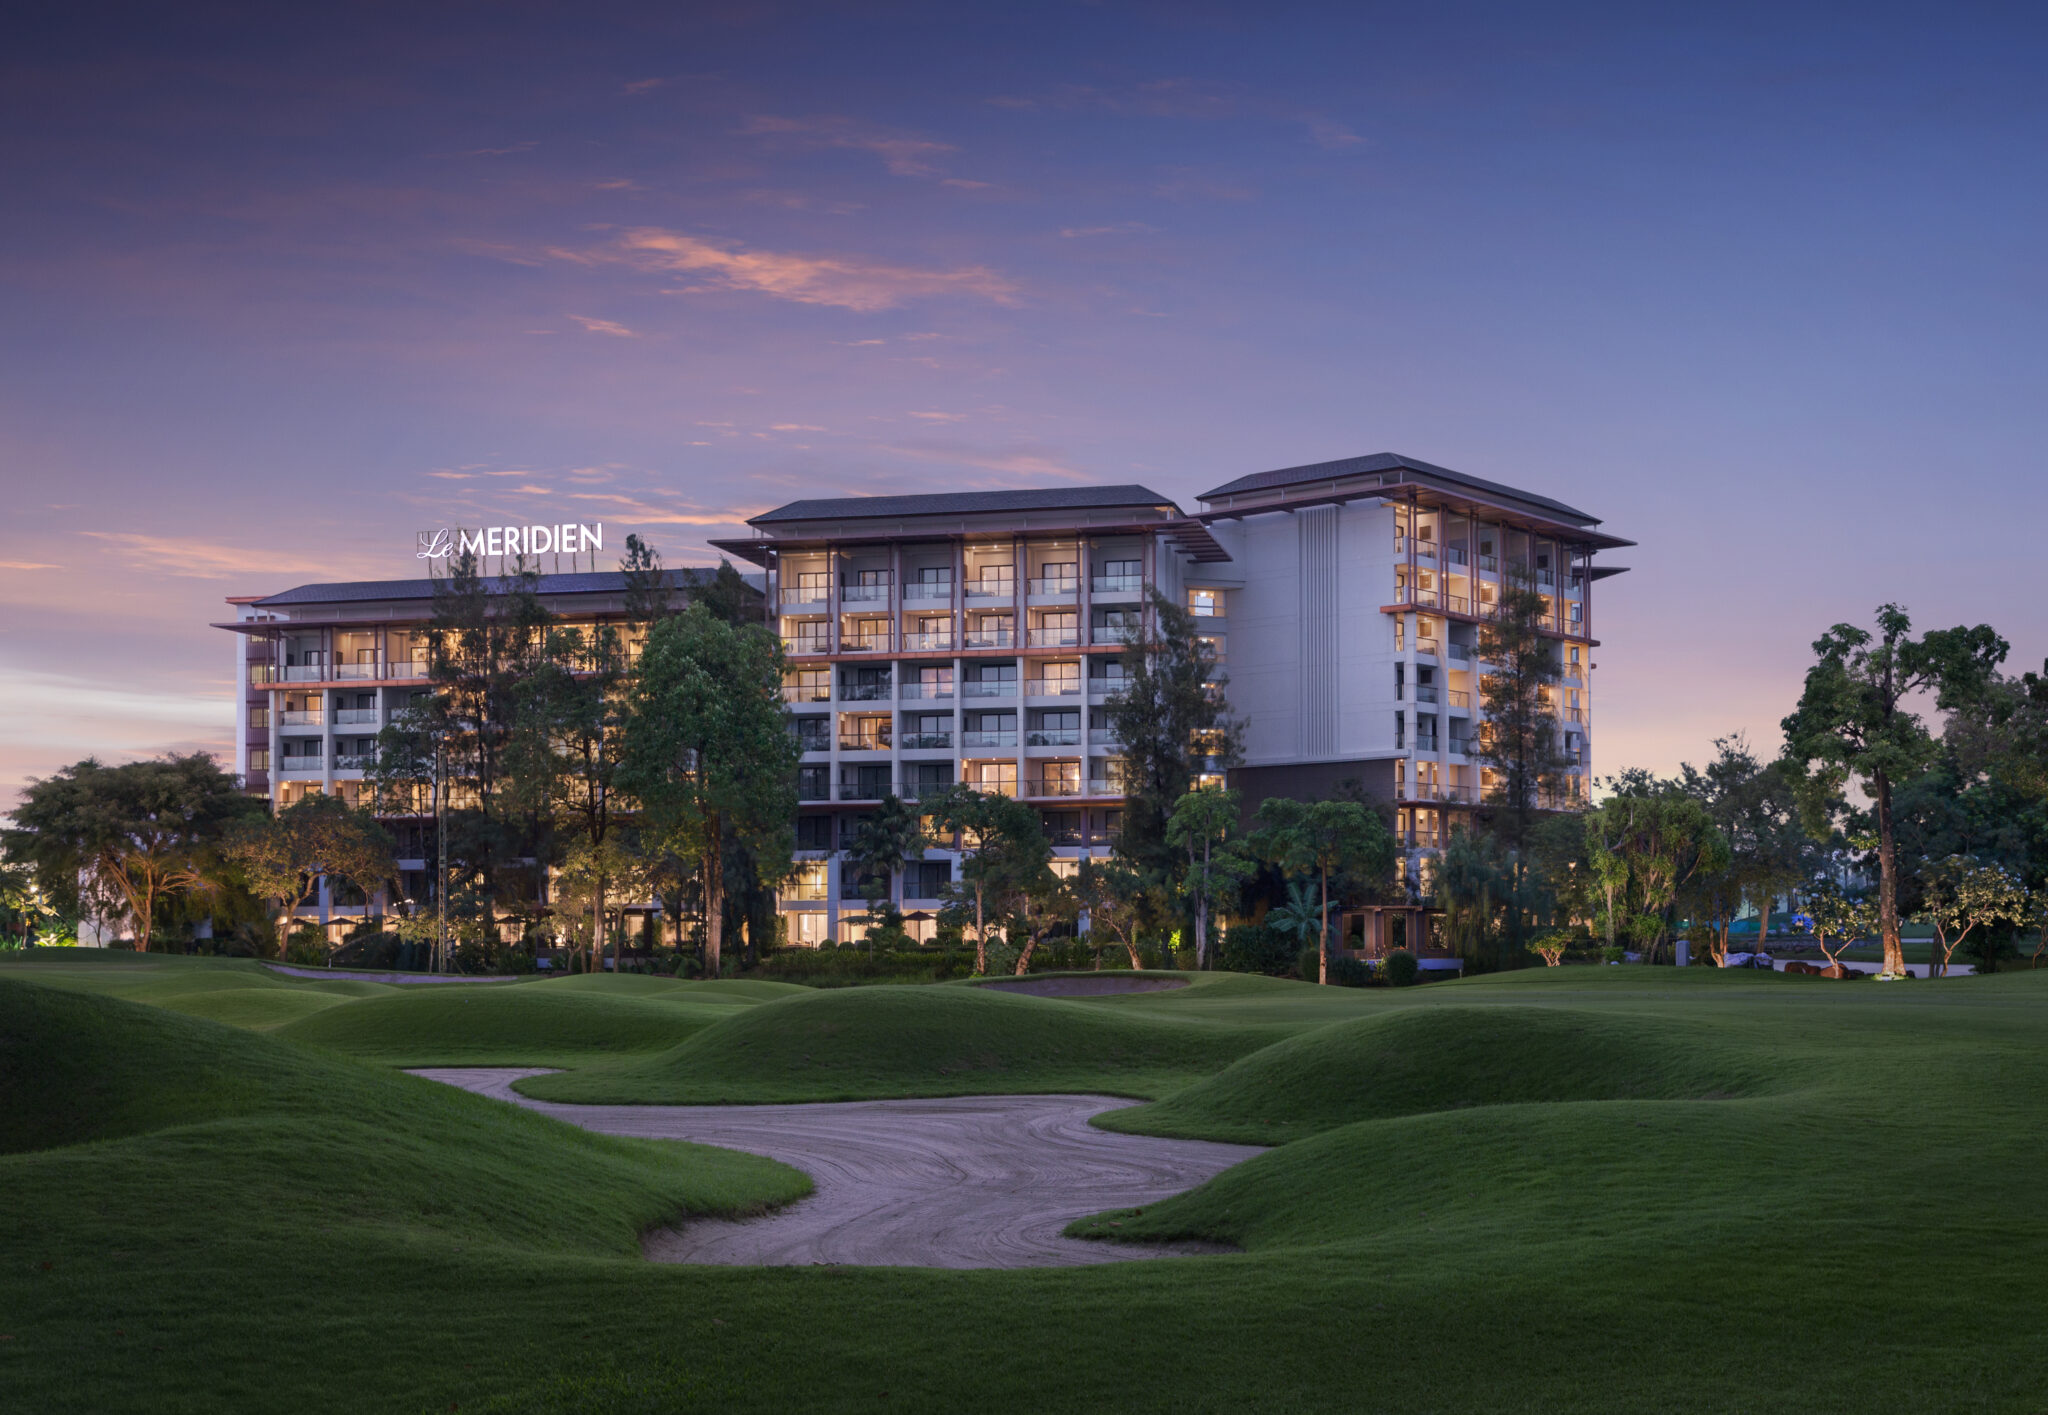 Le Méridien Suvarnabhumi, Bangkok Golf Resort and Spa rouvrira ses portes le 1er décembre